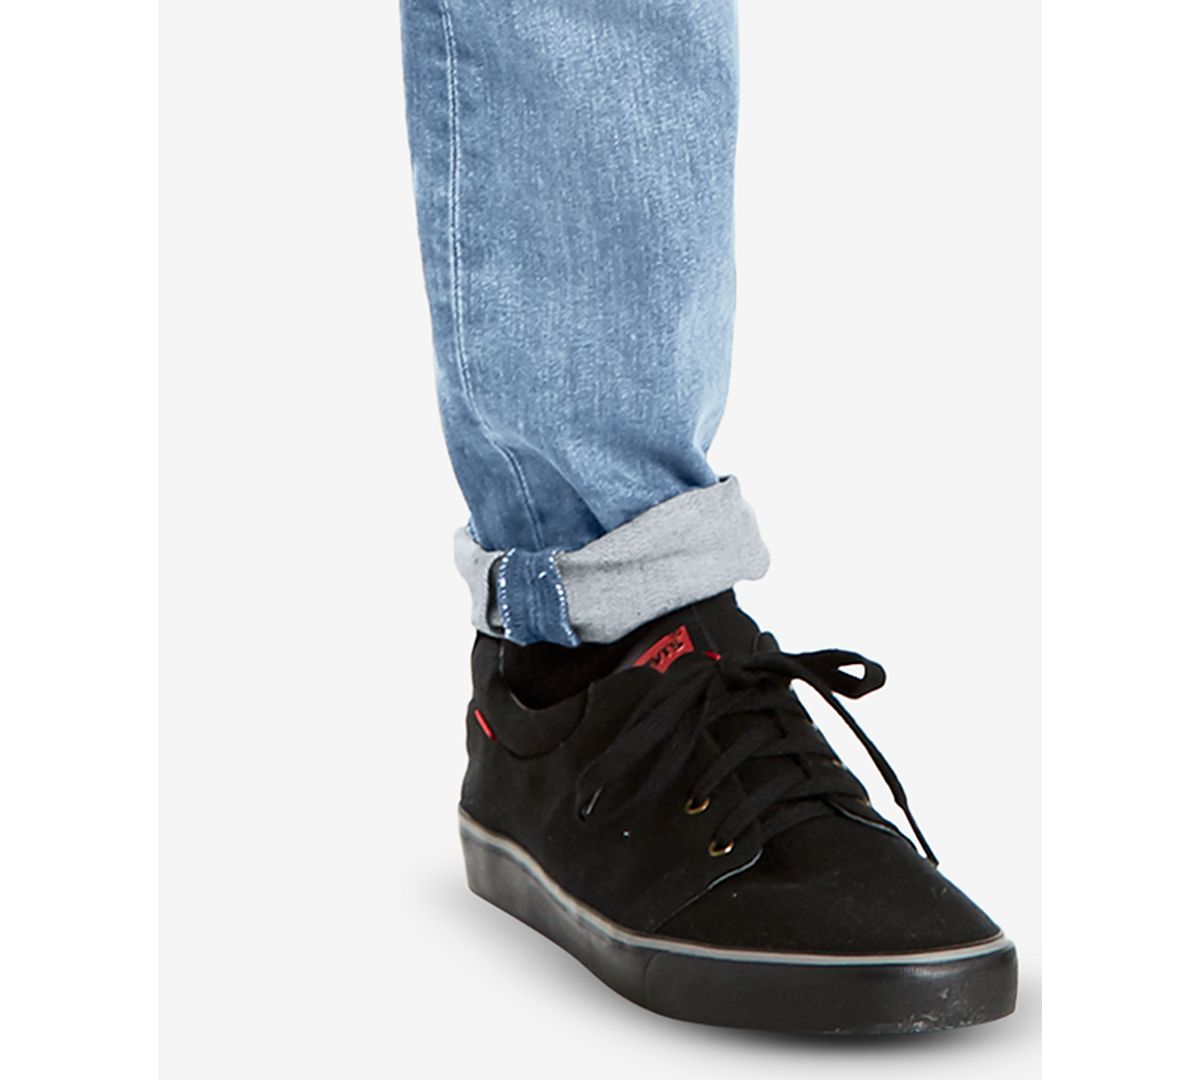 Levi's 512™ Slim Taper Fit Jeans Uncle Henry